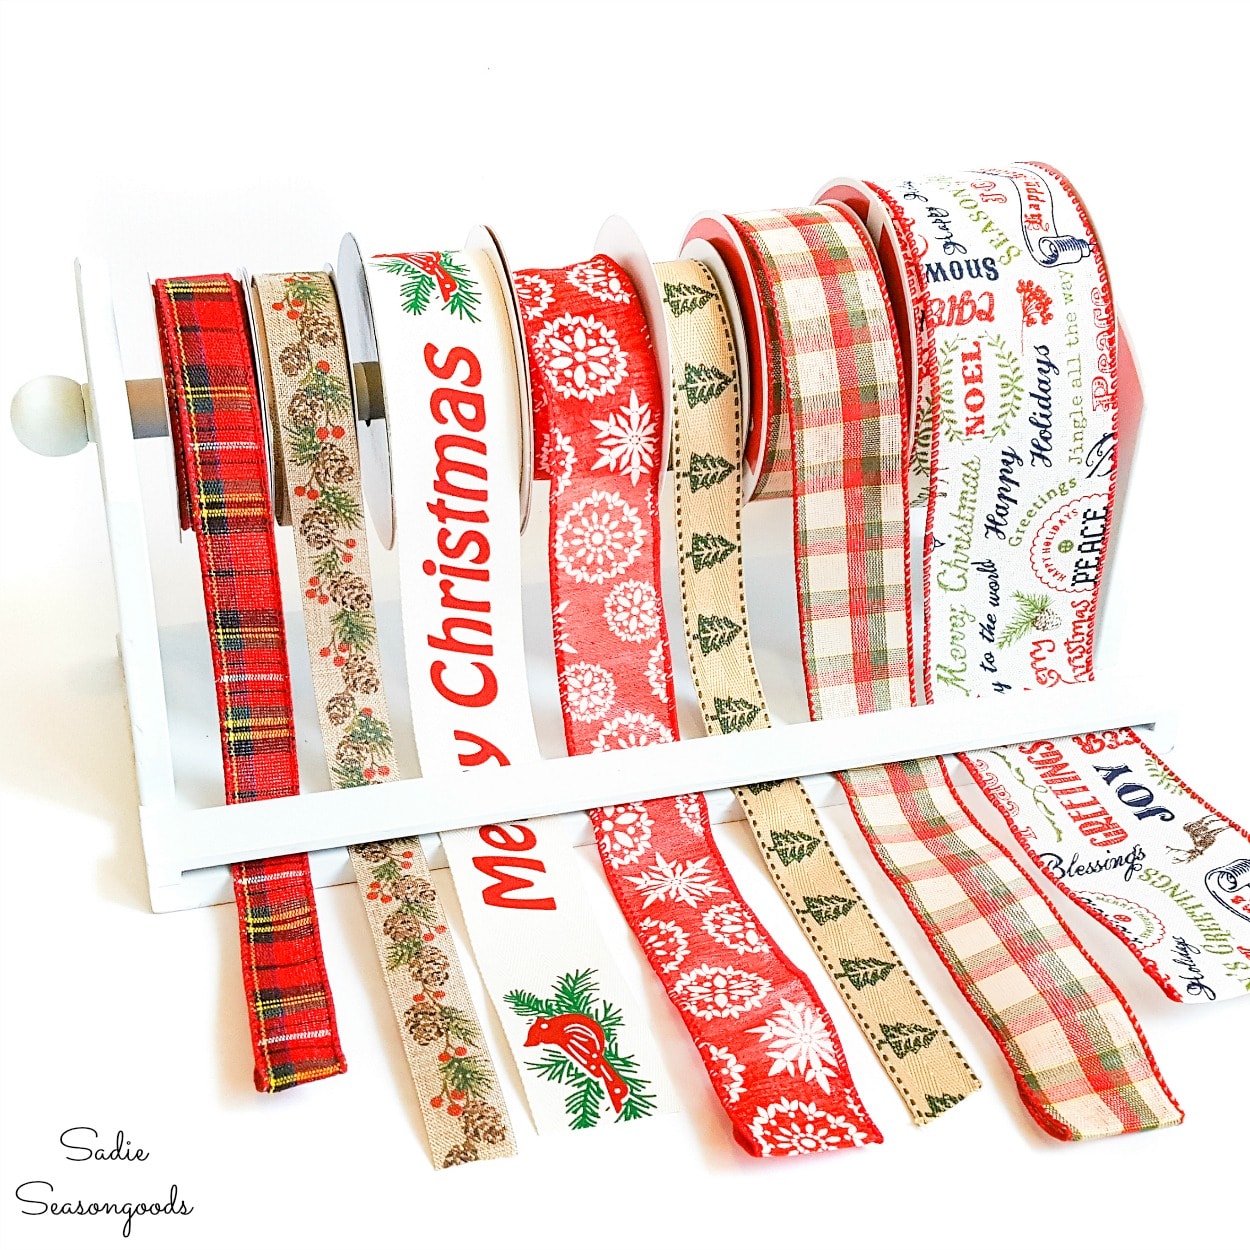 https://www.sadieseasongoods.com/wp-content/uploads/2014/03/craft-ribbon-storage-with-a-hanging-paper-towel-holder.jpg